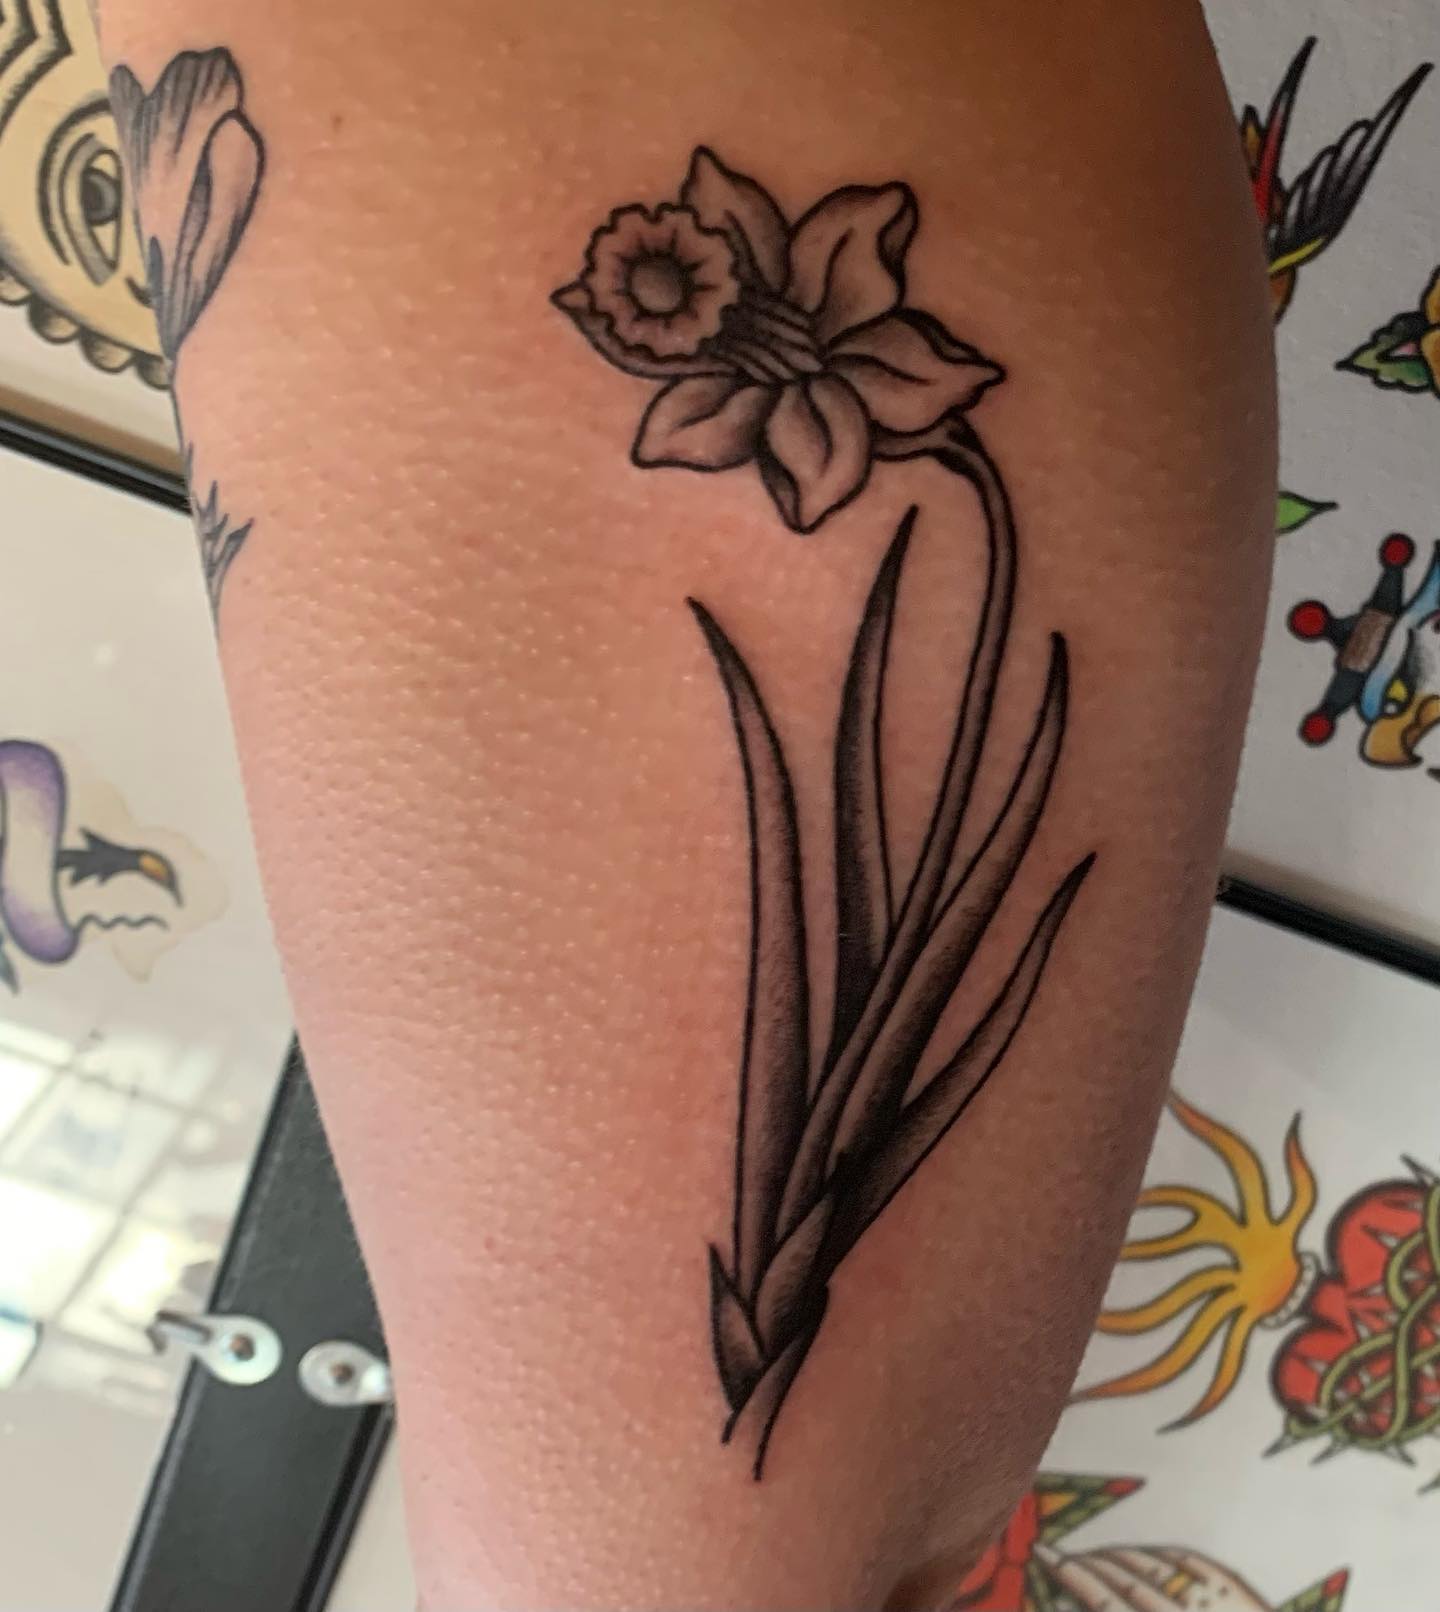 december birth flower narcissus tattoo